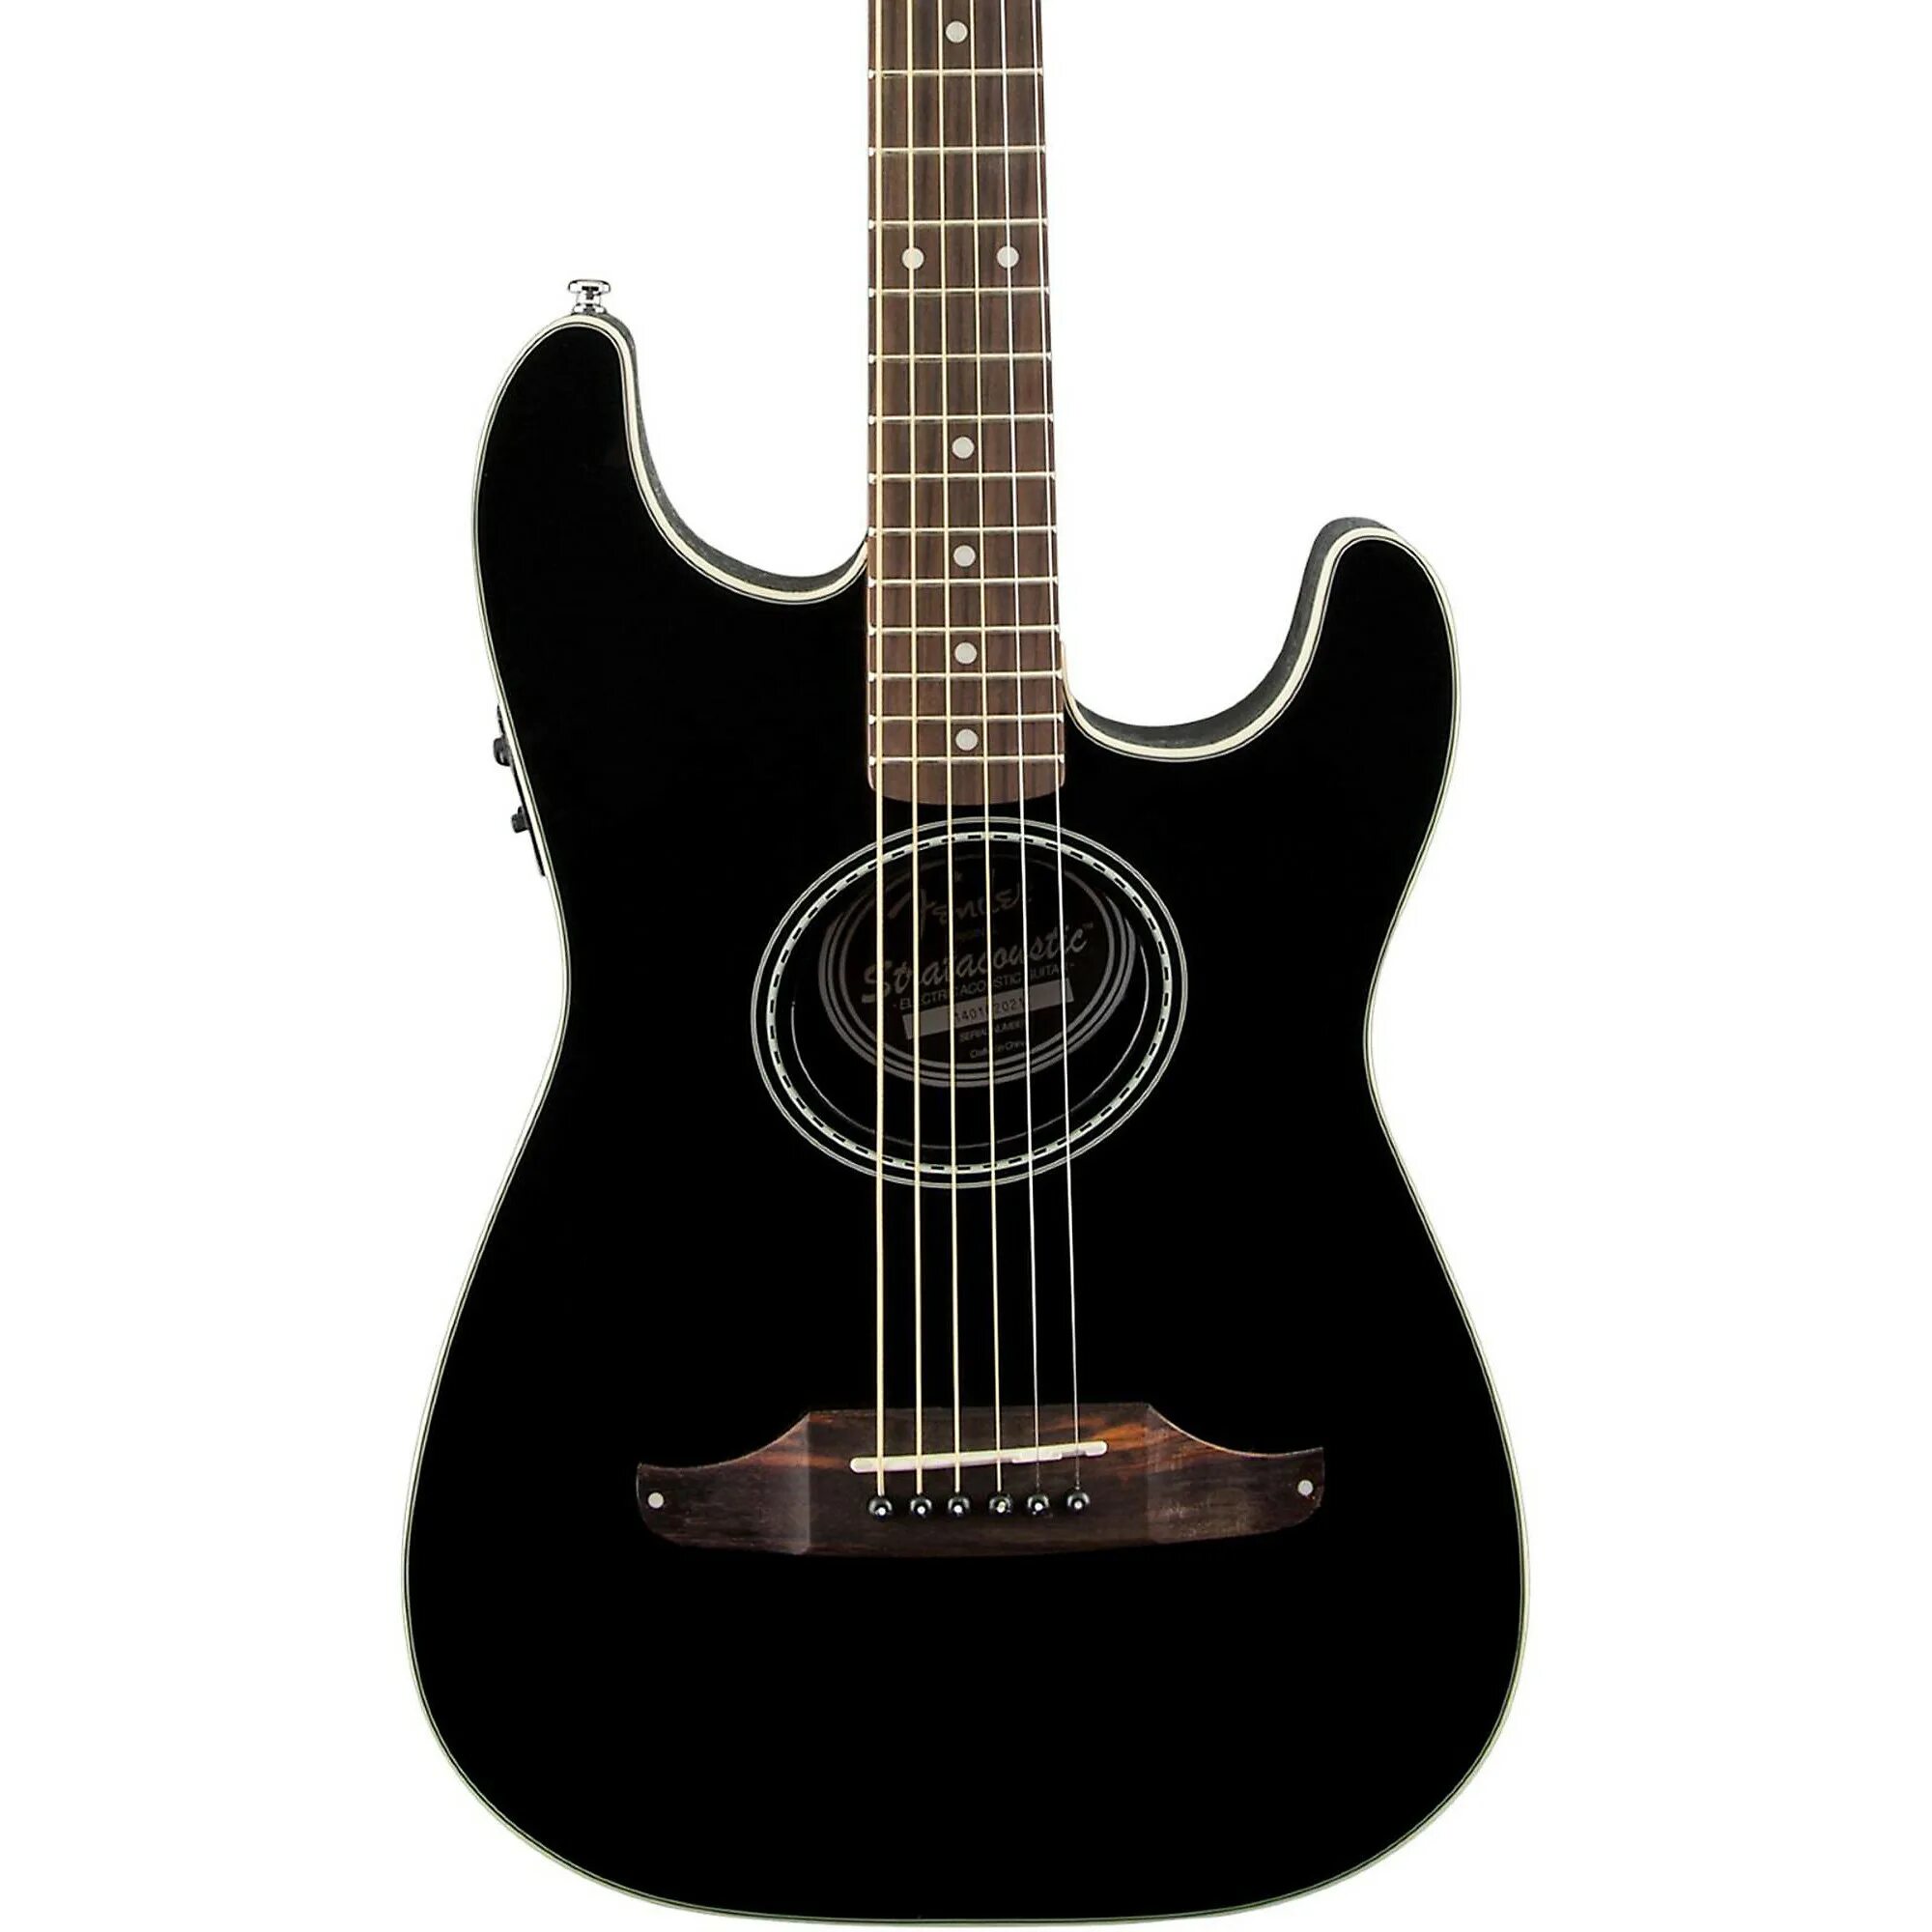 Электроакустическая гитара Fender. Акустическая гитара Fender Stratacoustic. Fender страт акустика. Гитара стратокастер акустика Фендер.